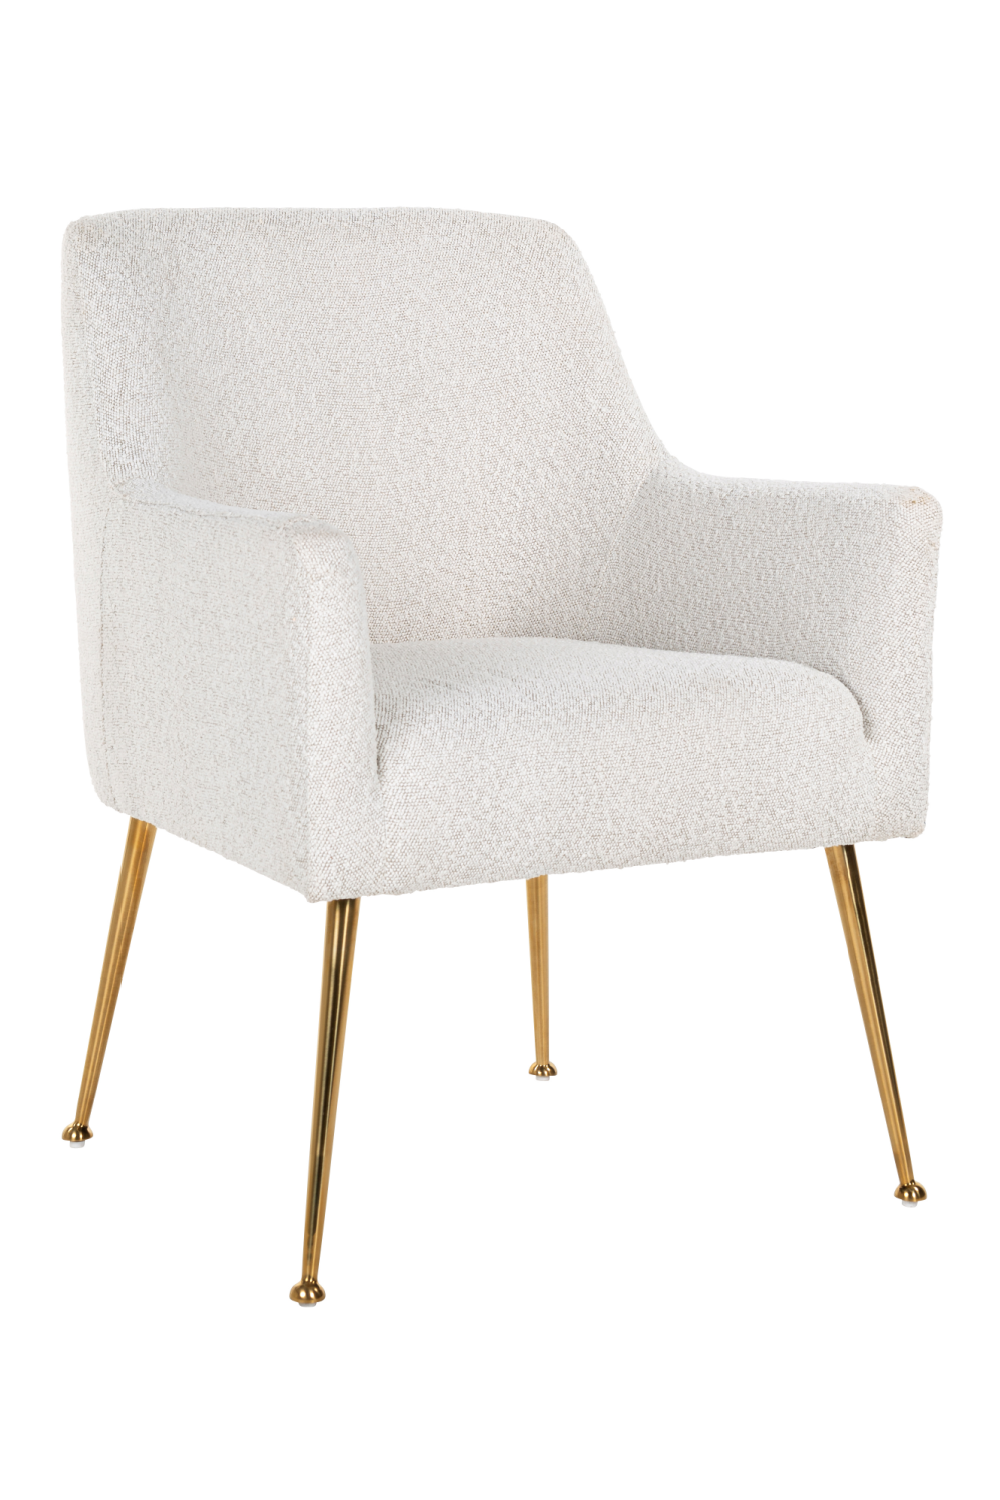 White Bouclé Upholstery Chair | OROA Harper | OROA